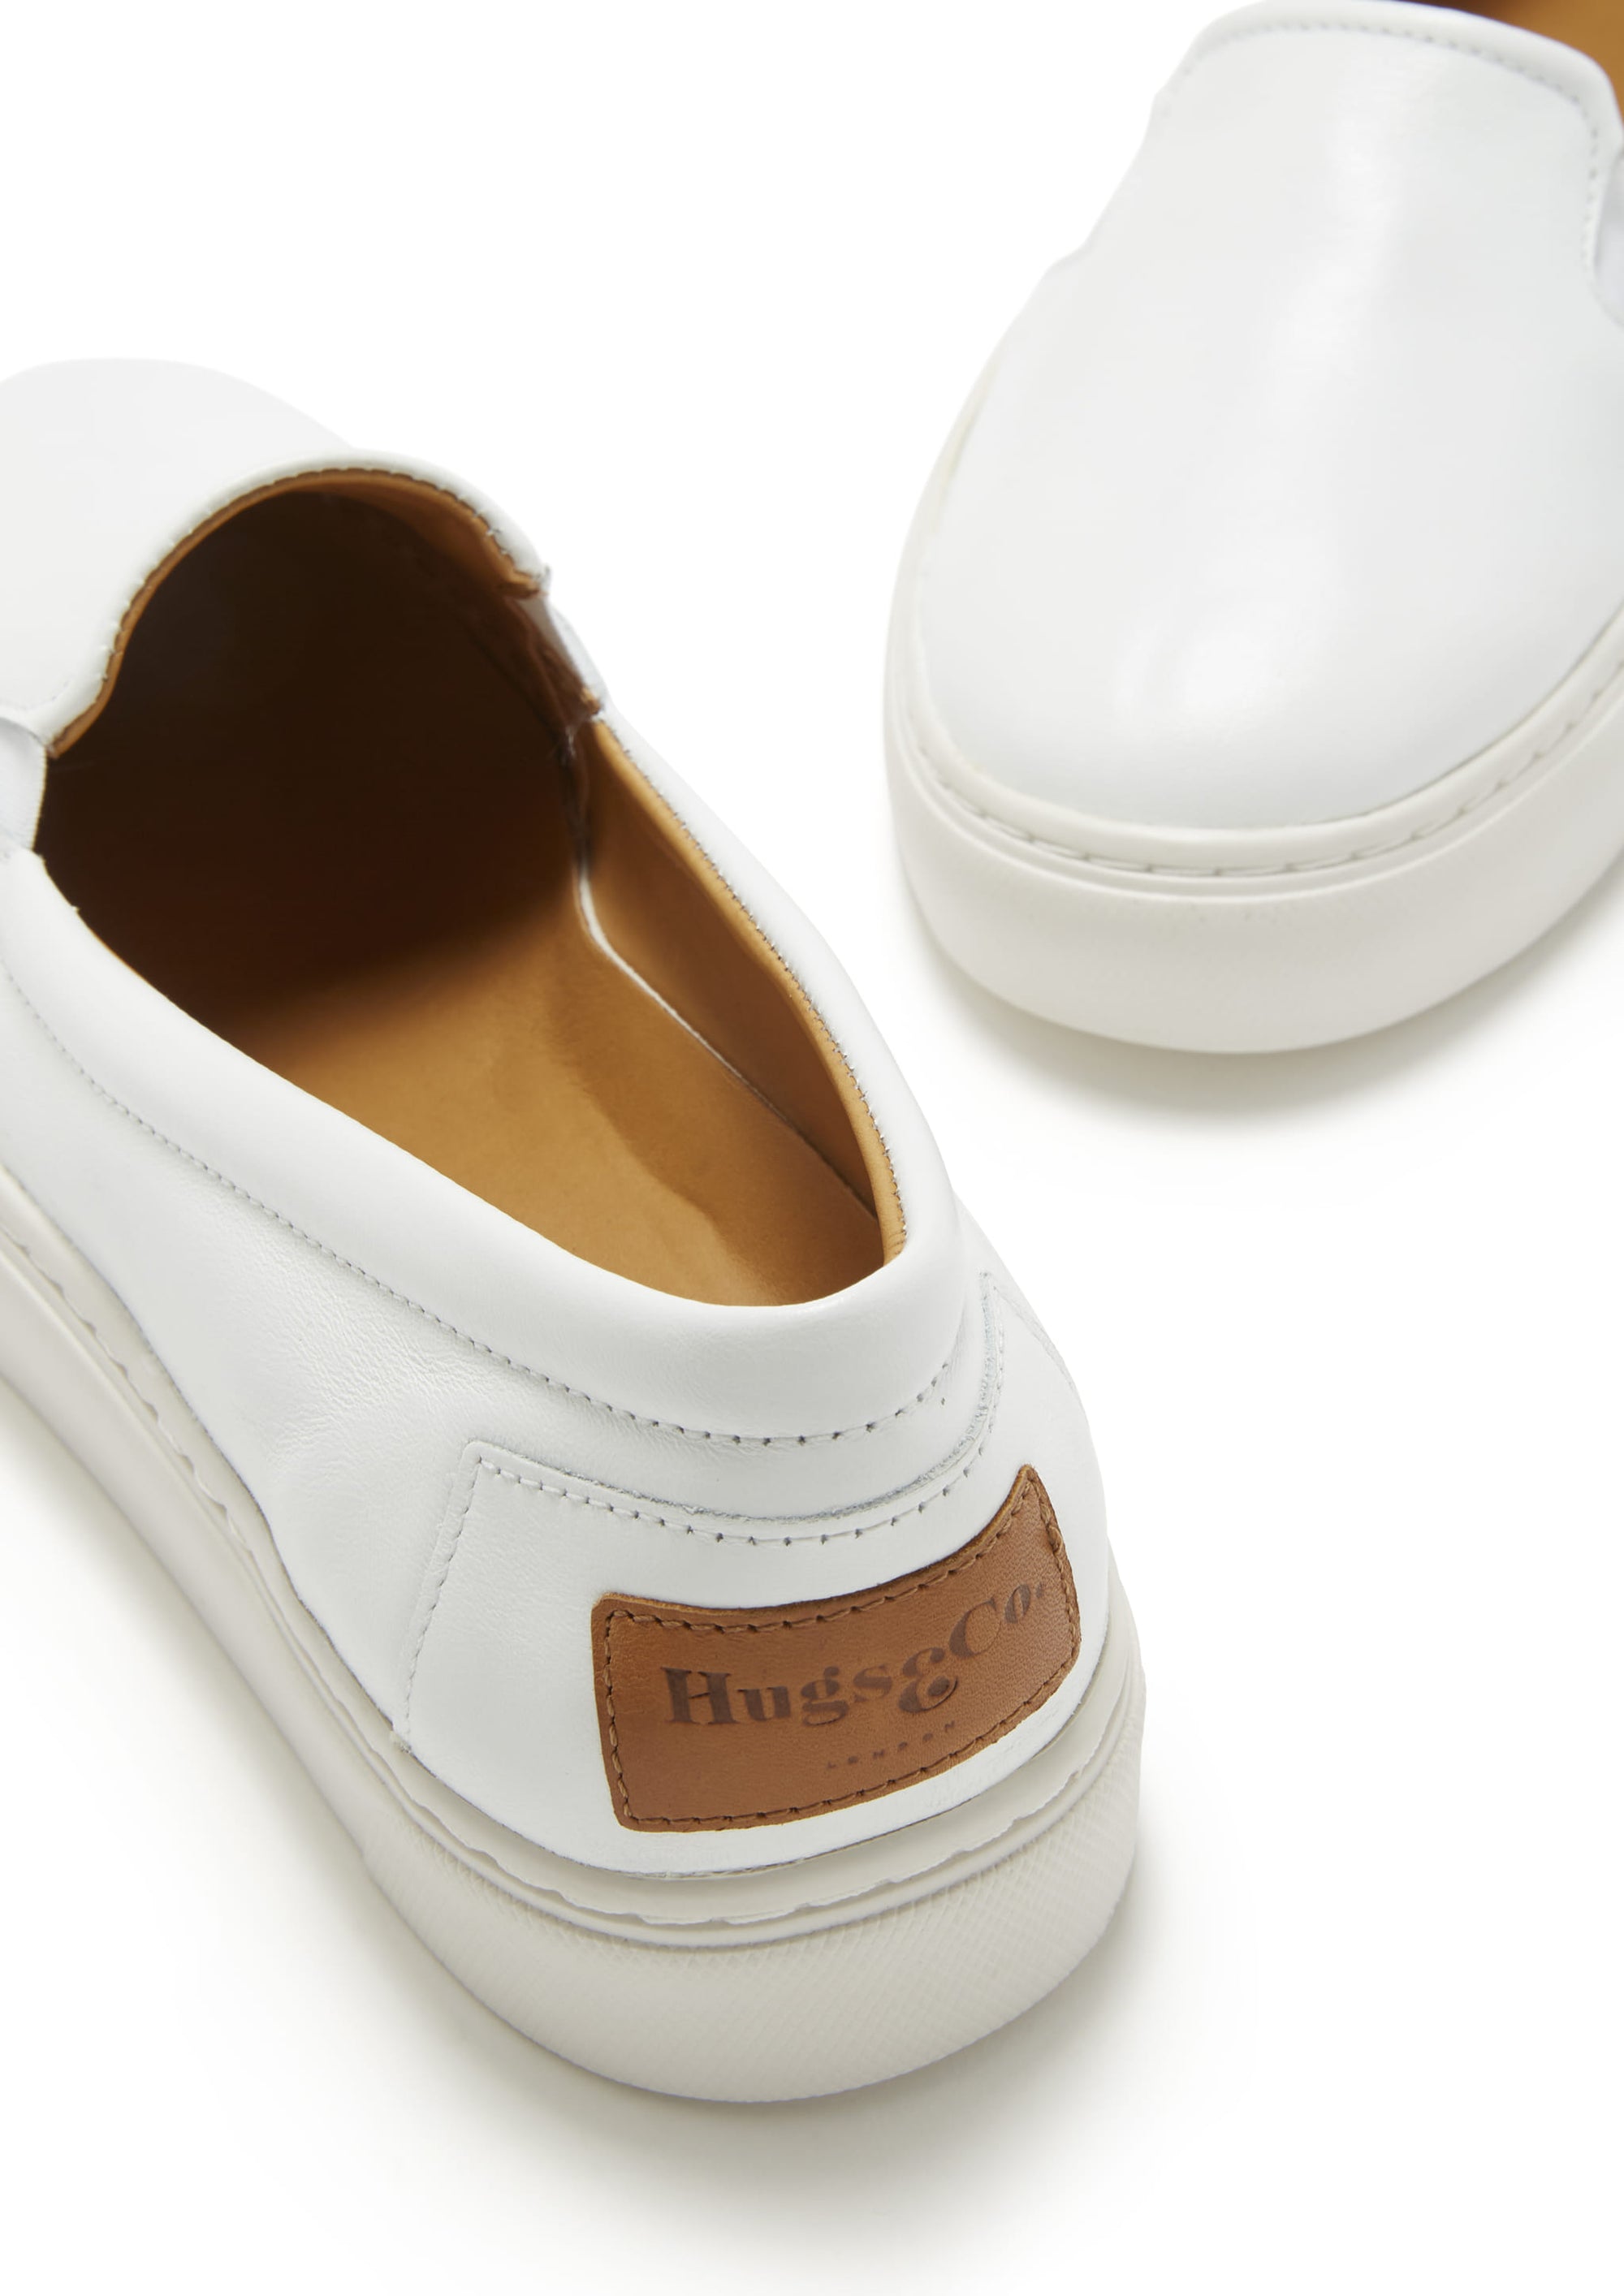 Women's Slip-On Sneakers, white leather